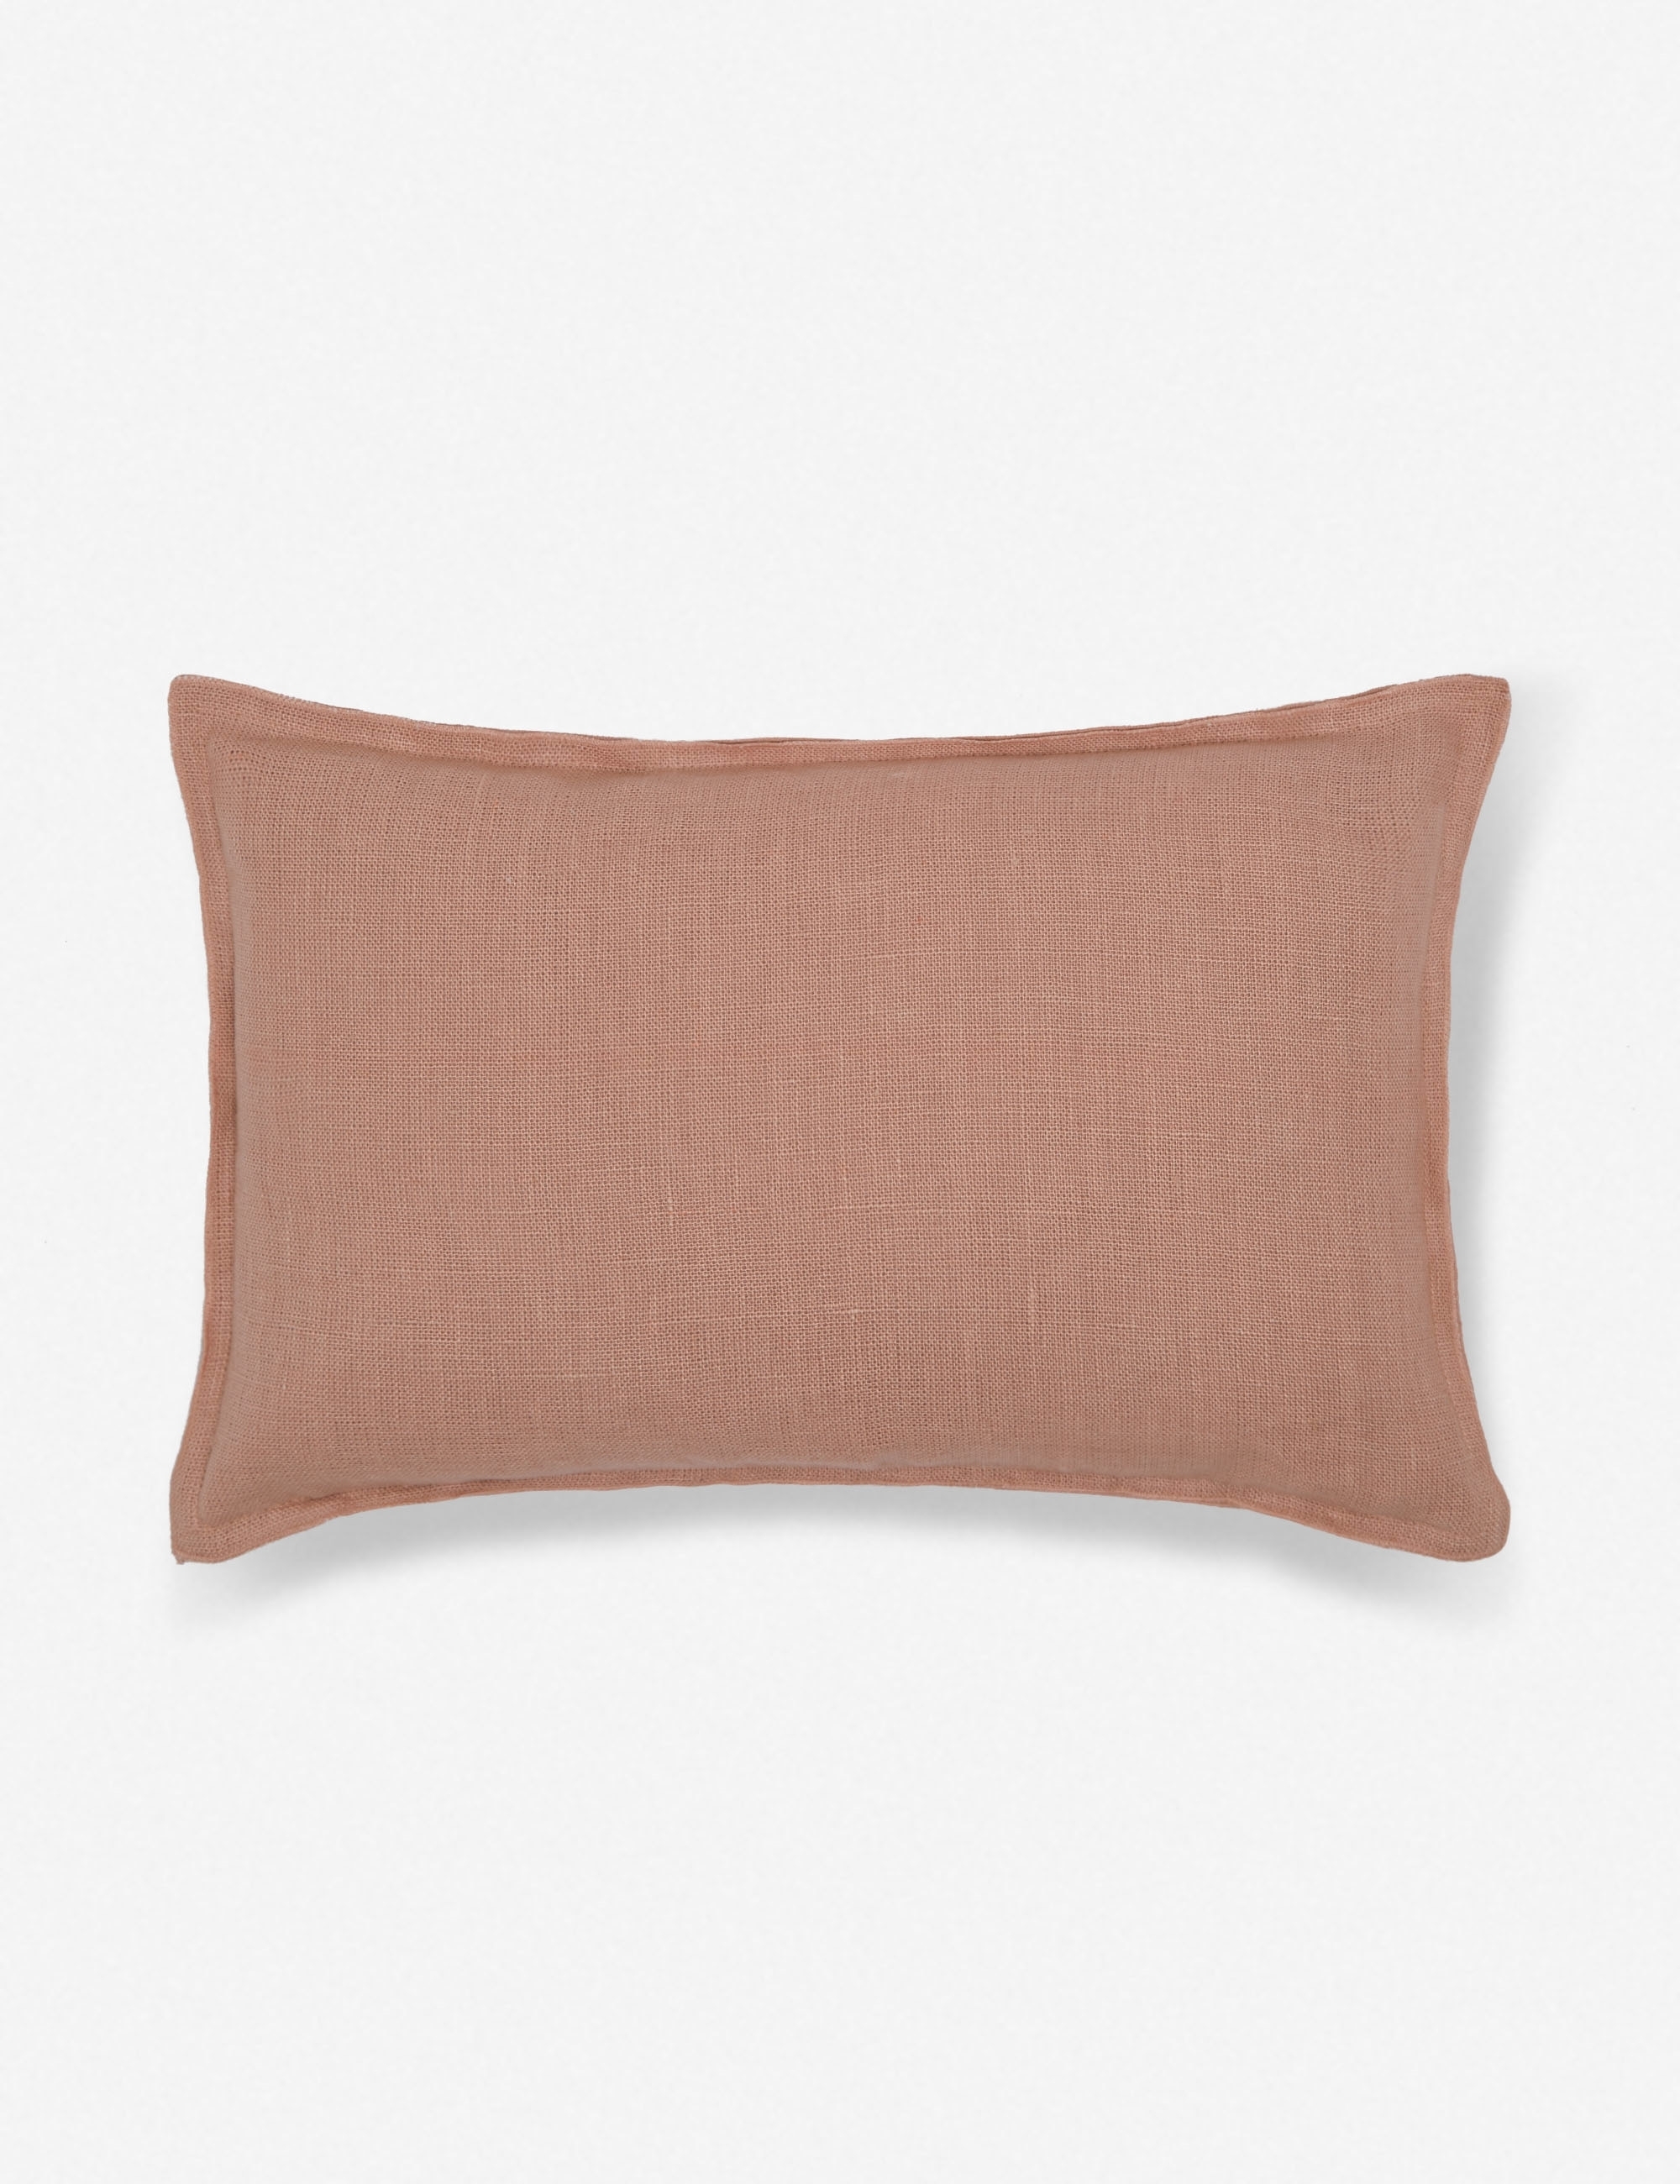 Arlo Linen Lumbar Pillow, Terracotta - Image 1